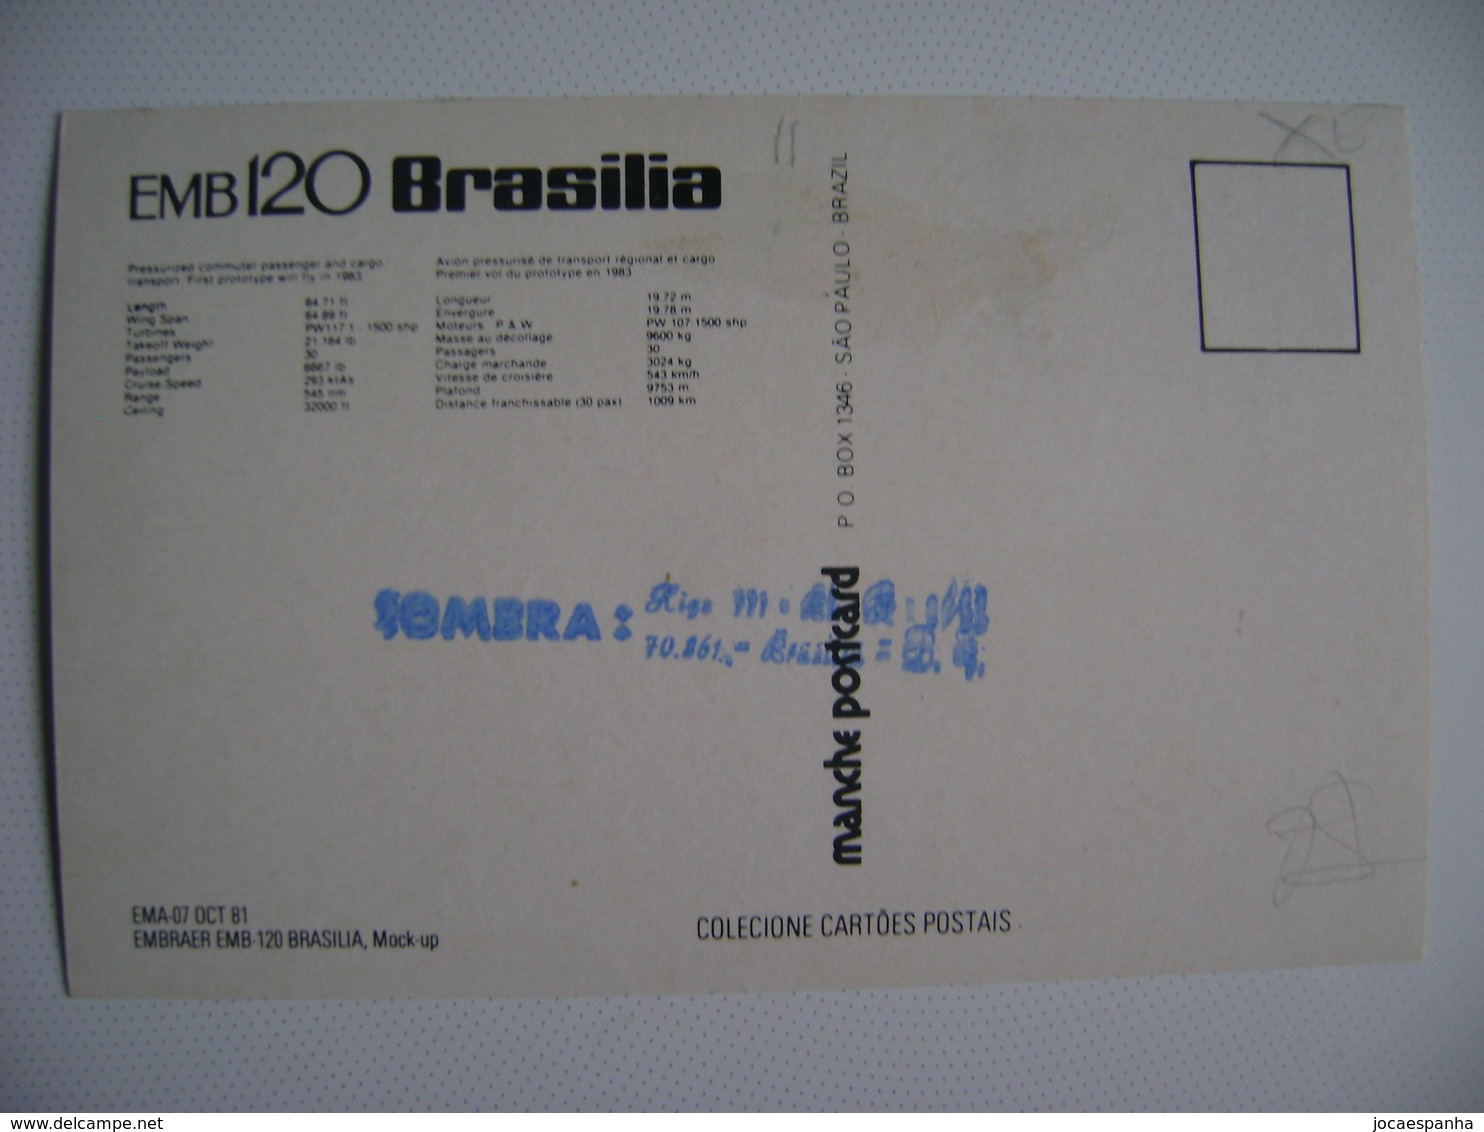 BRAZIL - MAXIMUN MAXIMUM "AIRPLANE EMB 120 - BRASILIA" IN THE STATE - Vliegtuigen